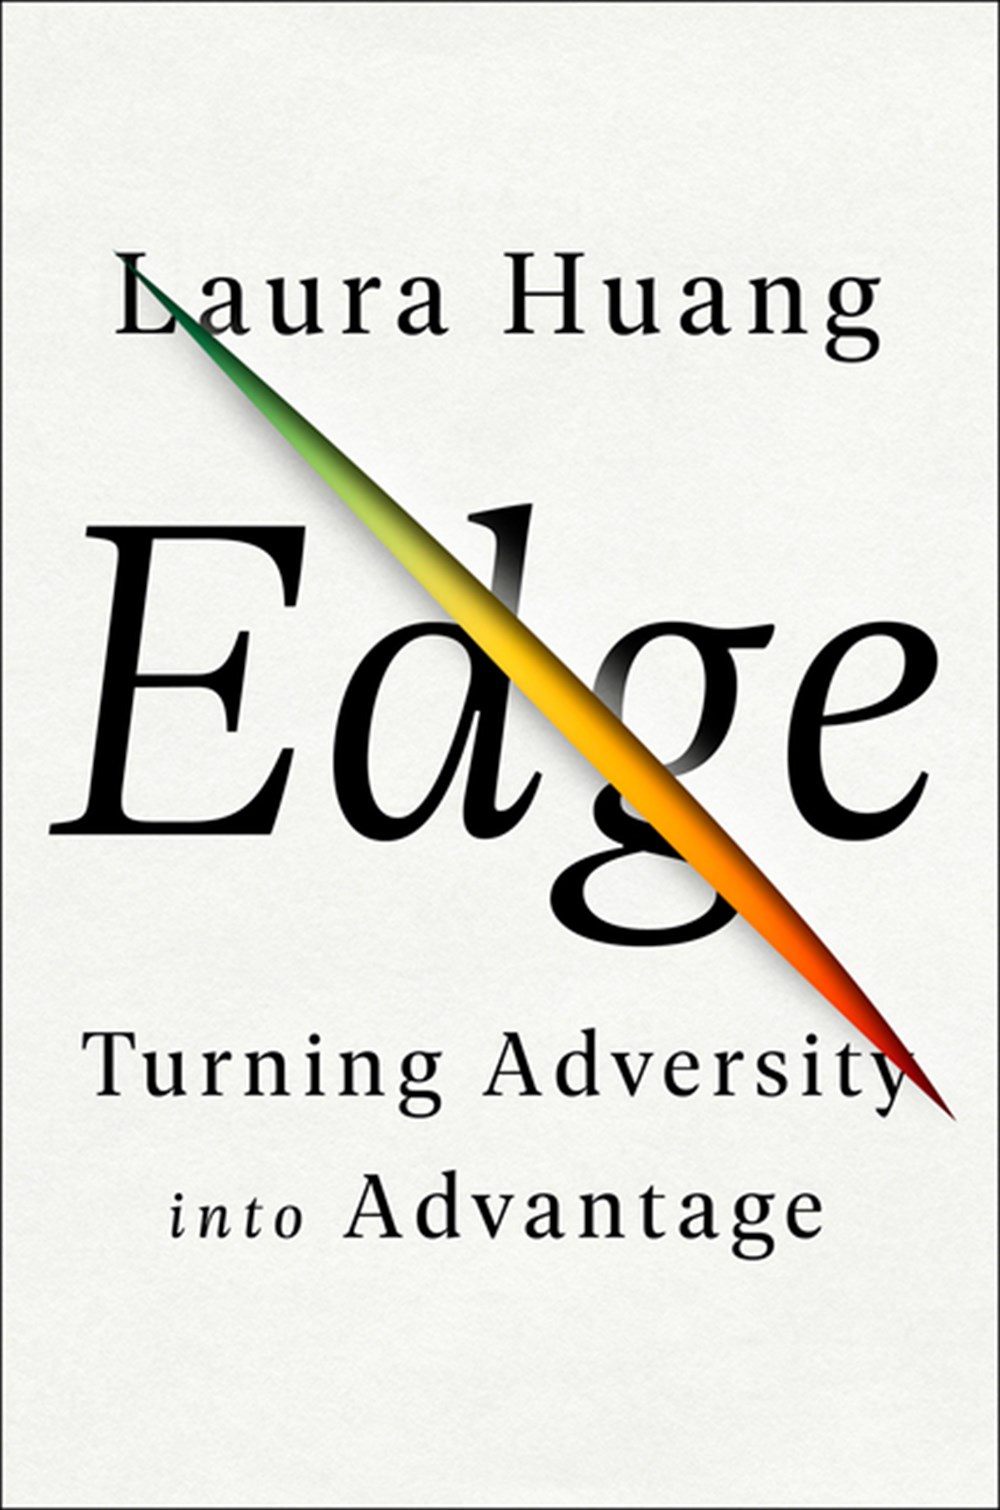 Edge Turning Adversity Into Advantage